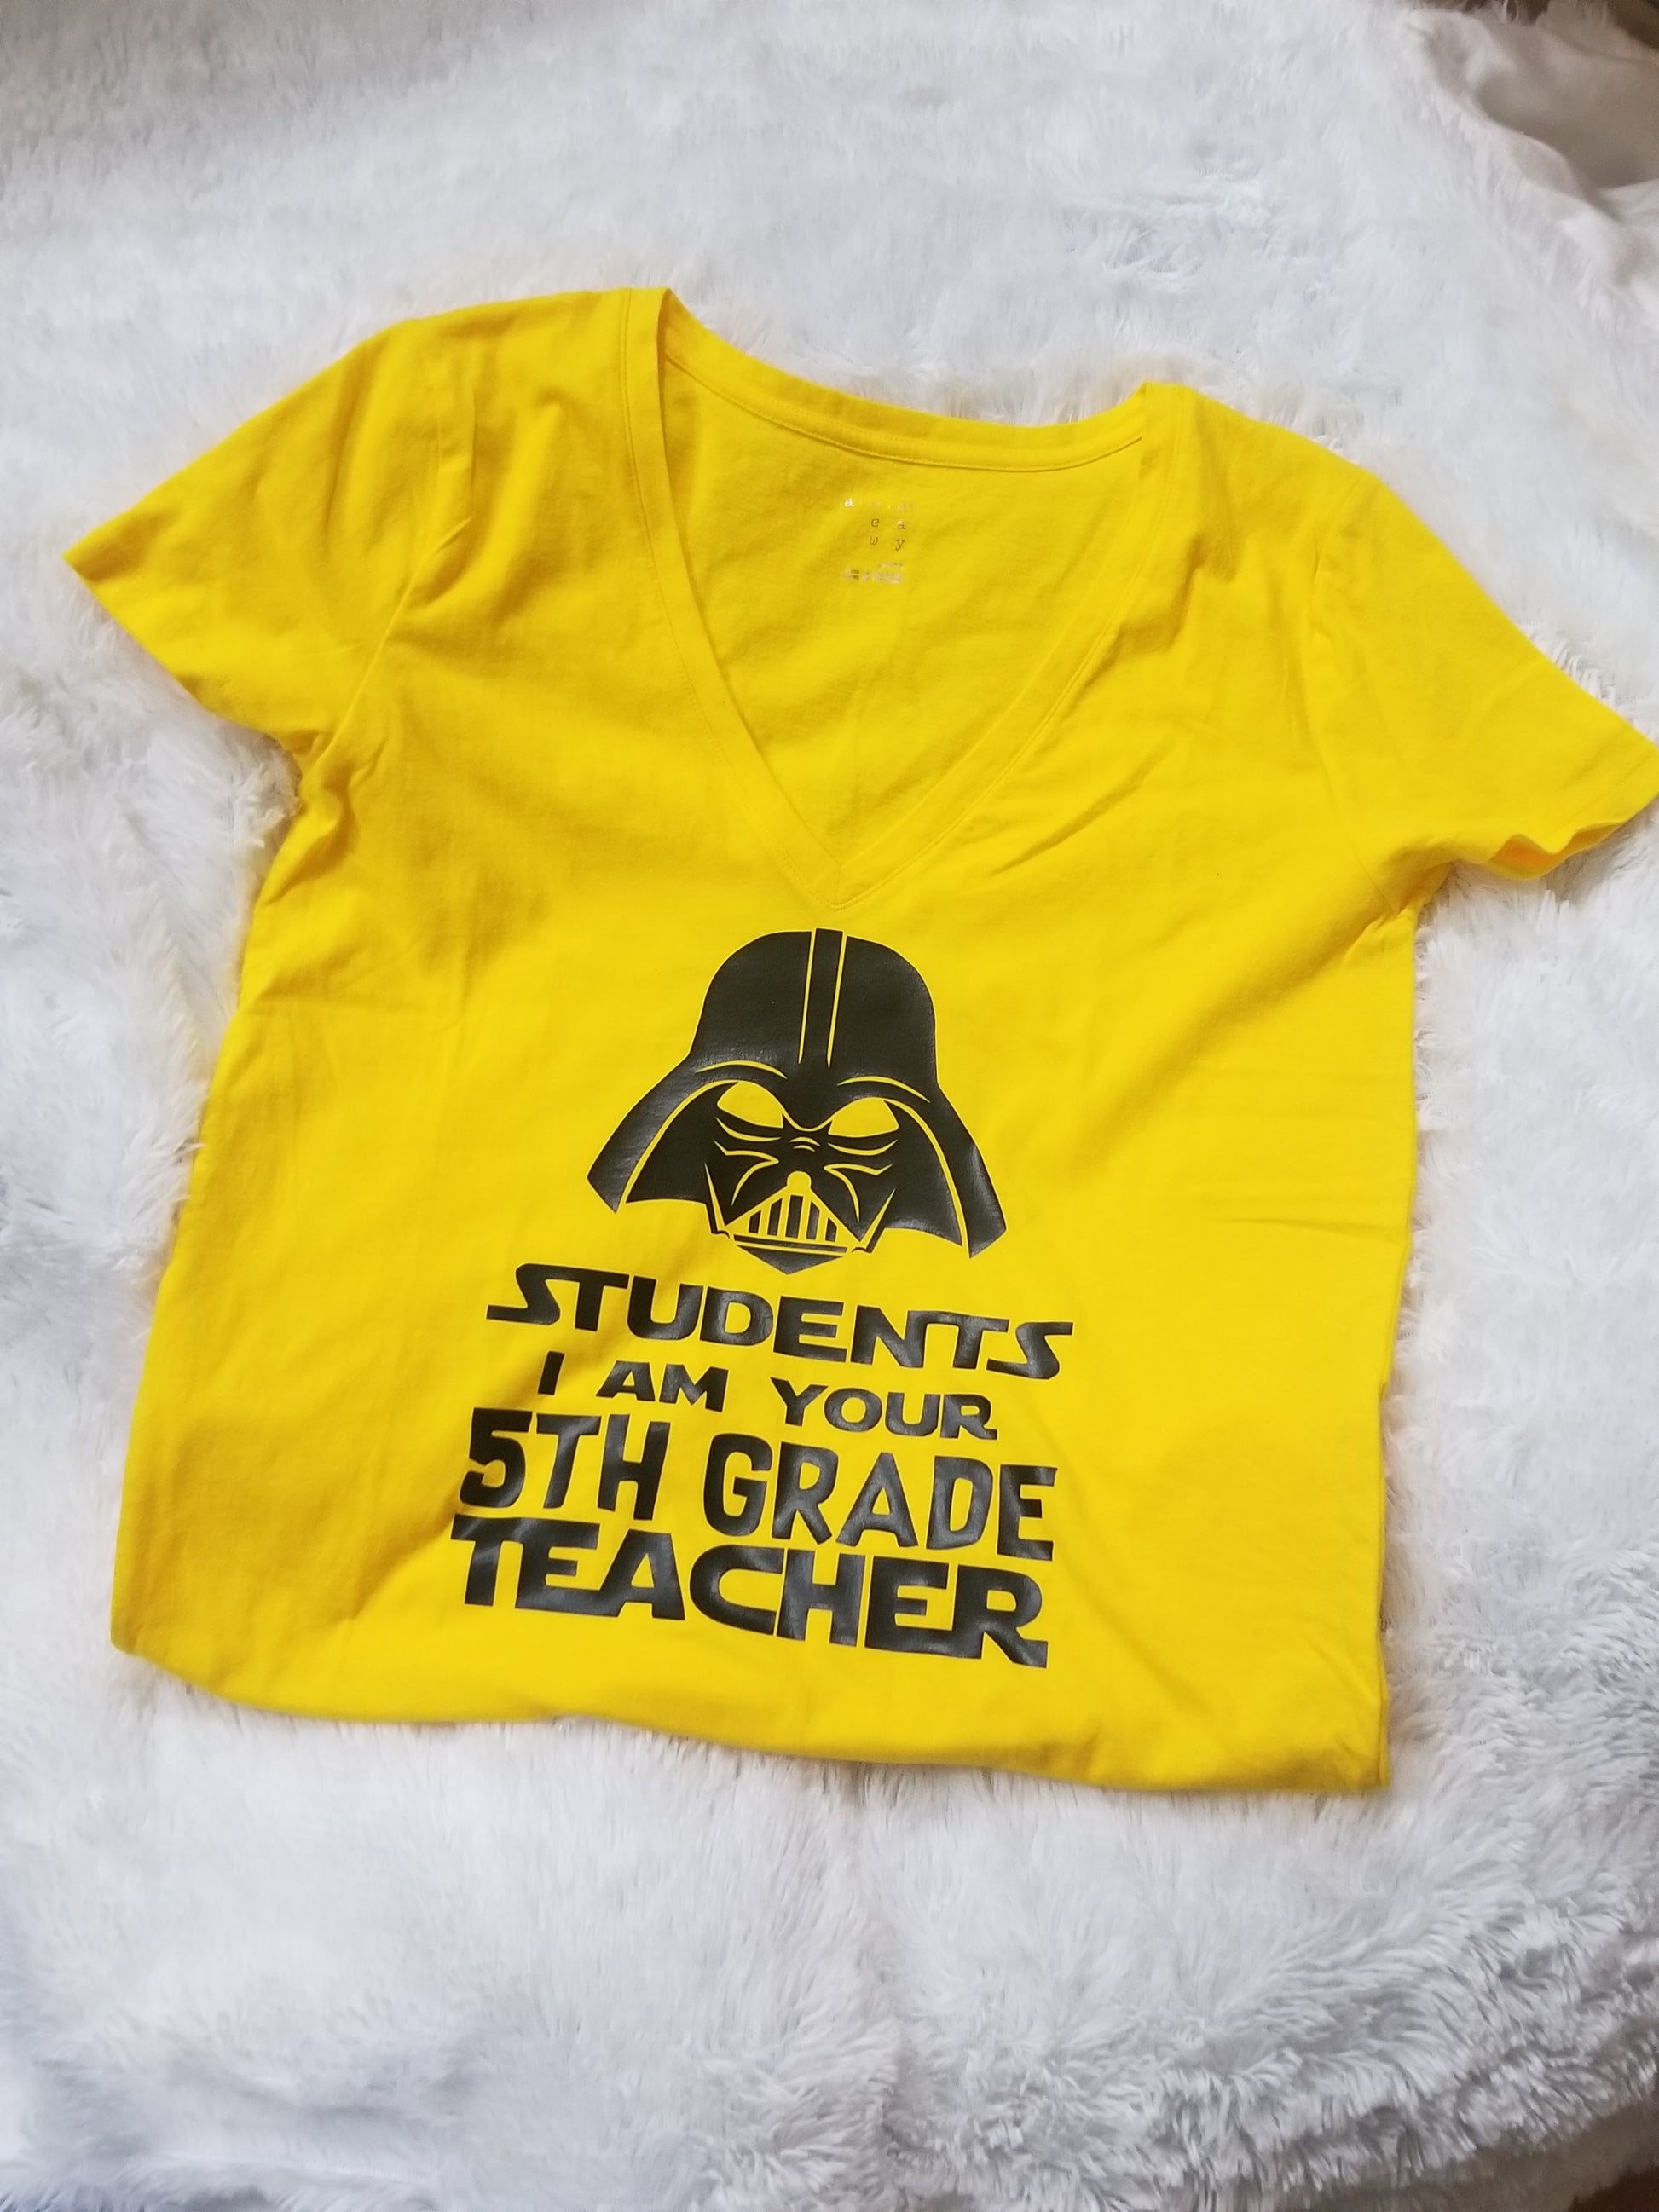 teacher school shirt starwars